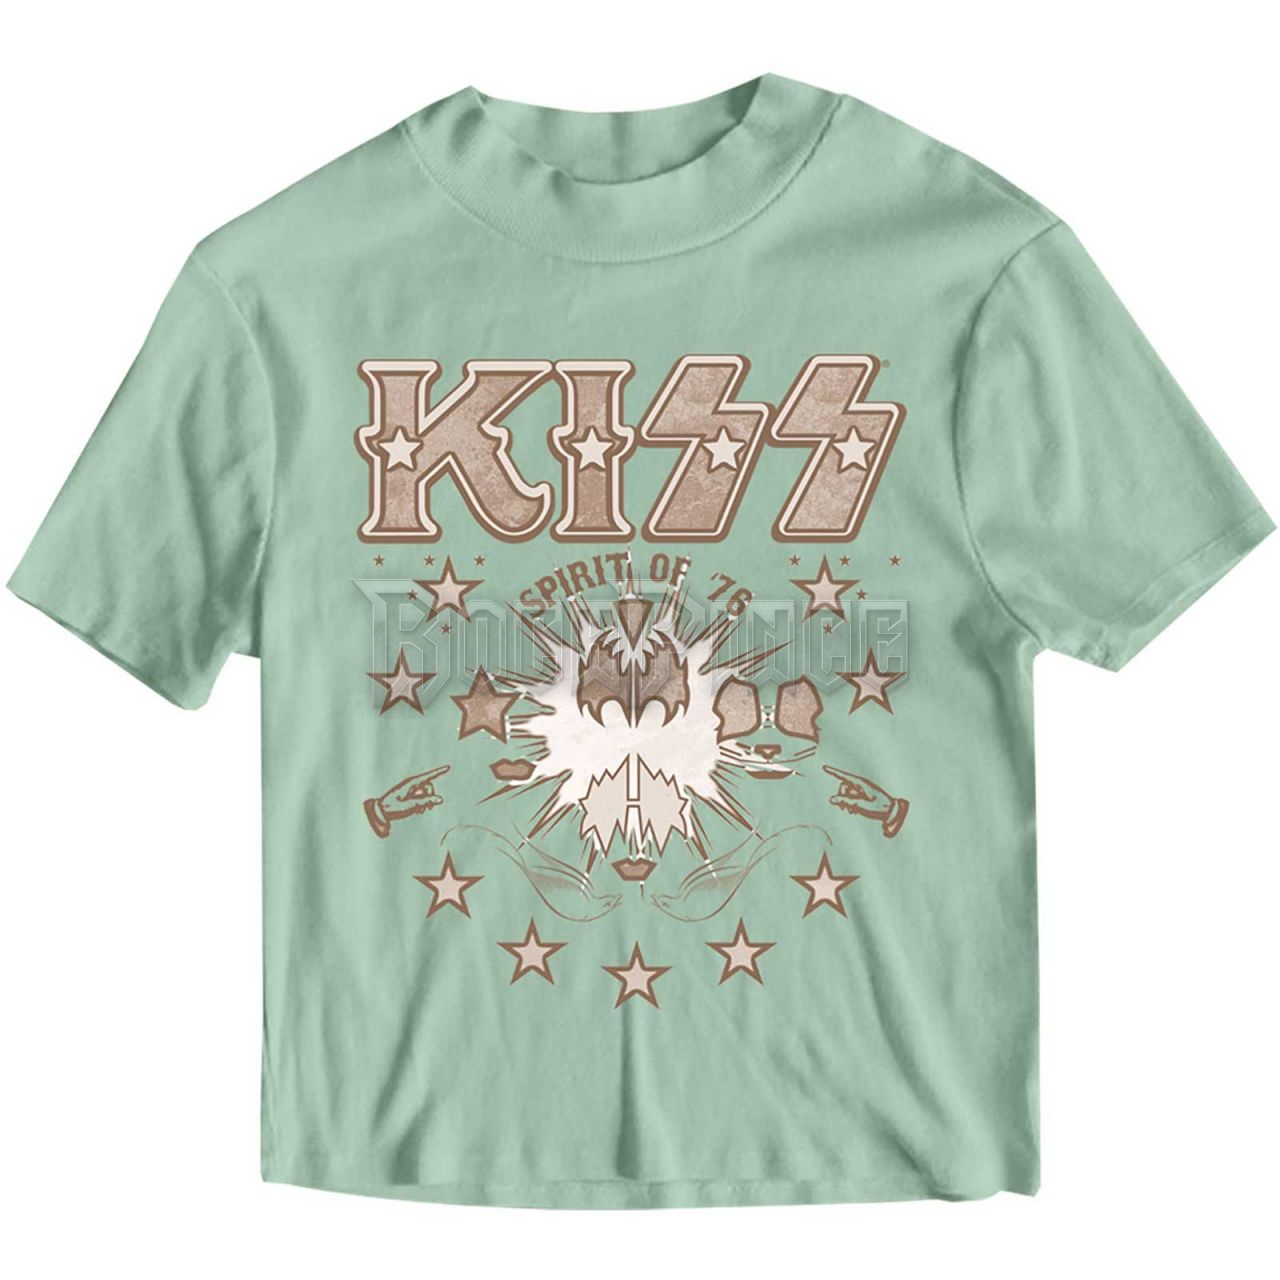 KISS - Spirit of '76 - női crop top - KISSCT43LGR